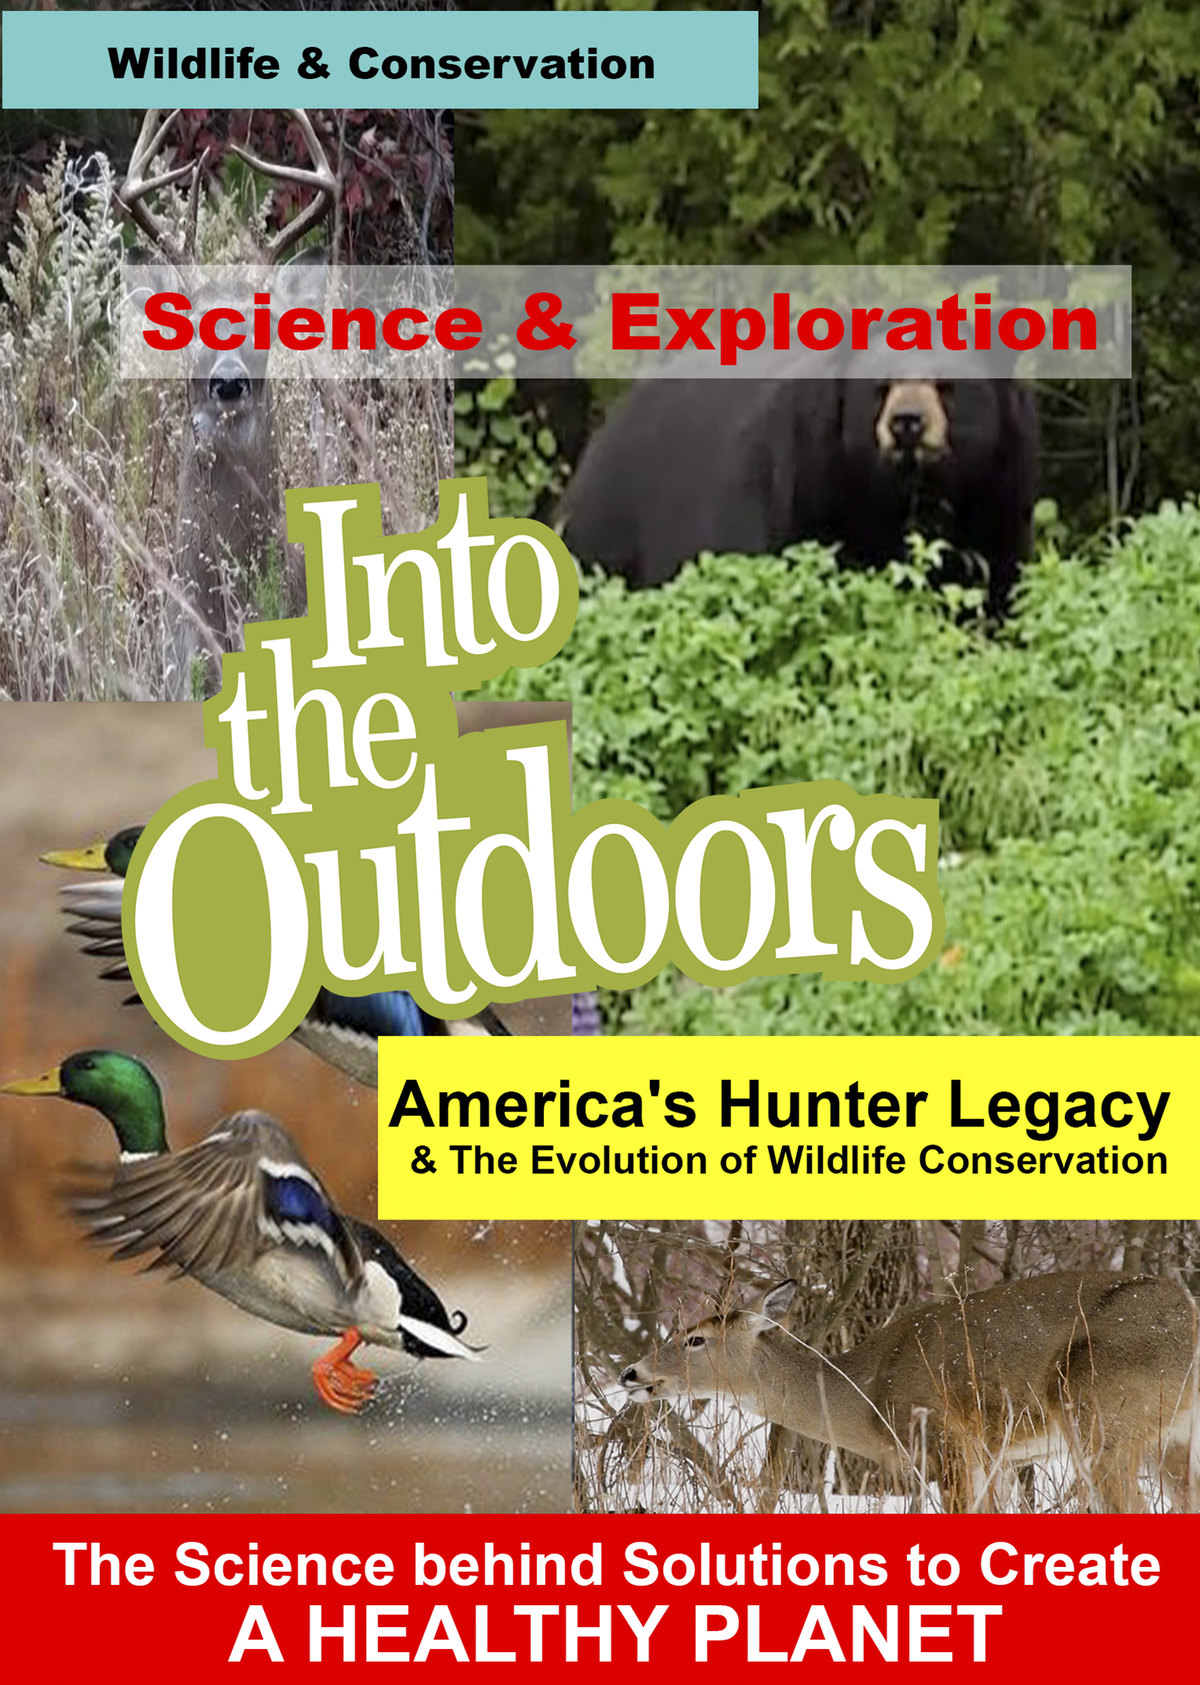 K5002 - America's Hunter Legacy & The Evolution of Wildlife Conservation